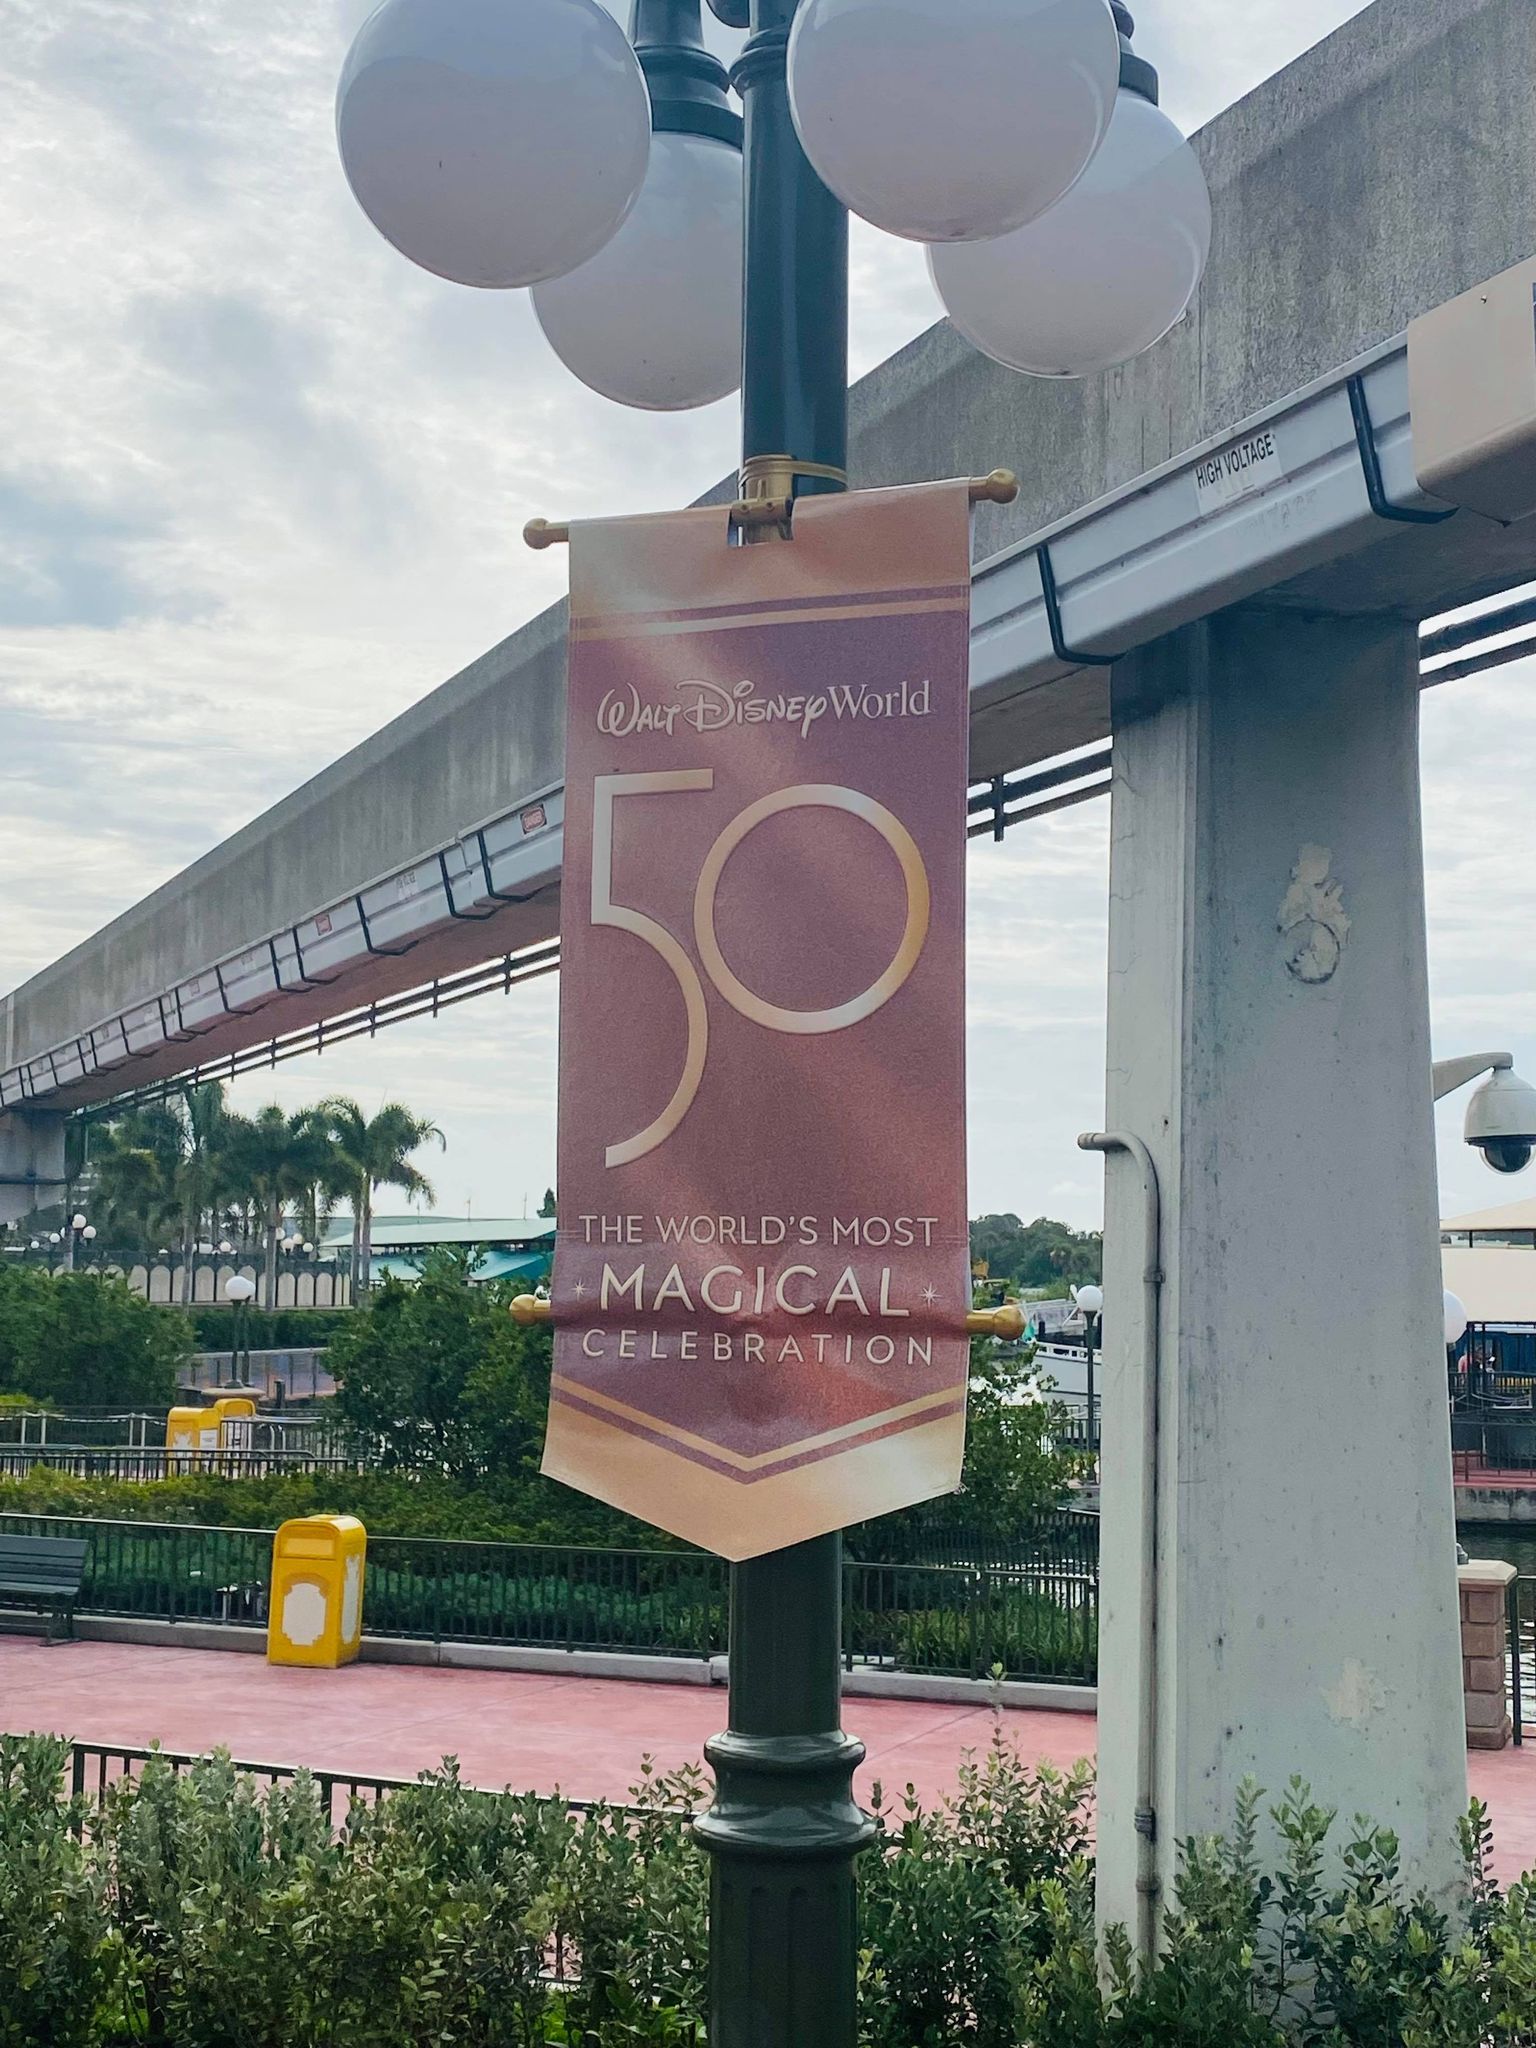 magic kingdom 50th anniversary banners